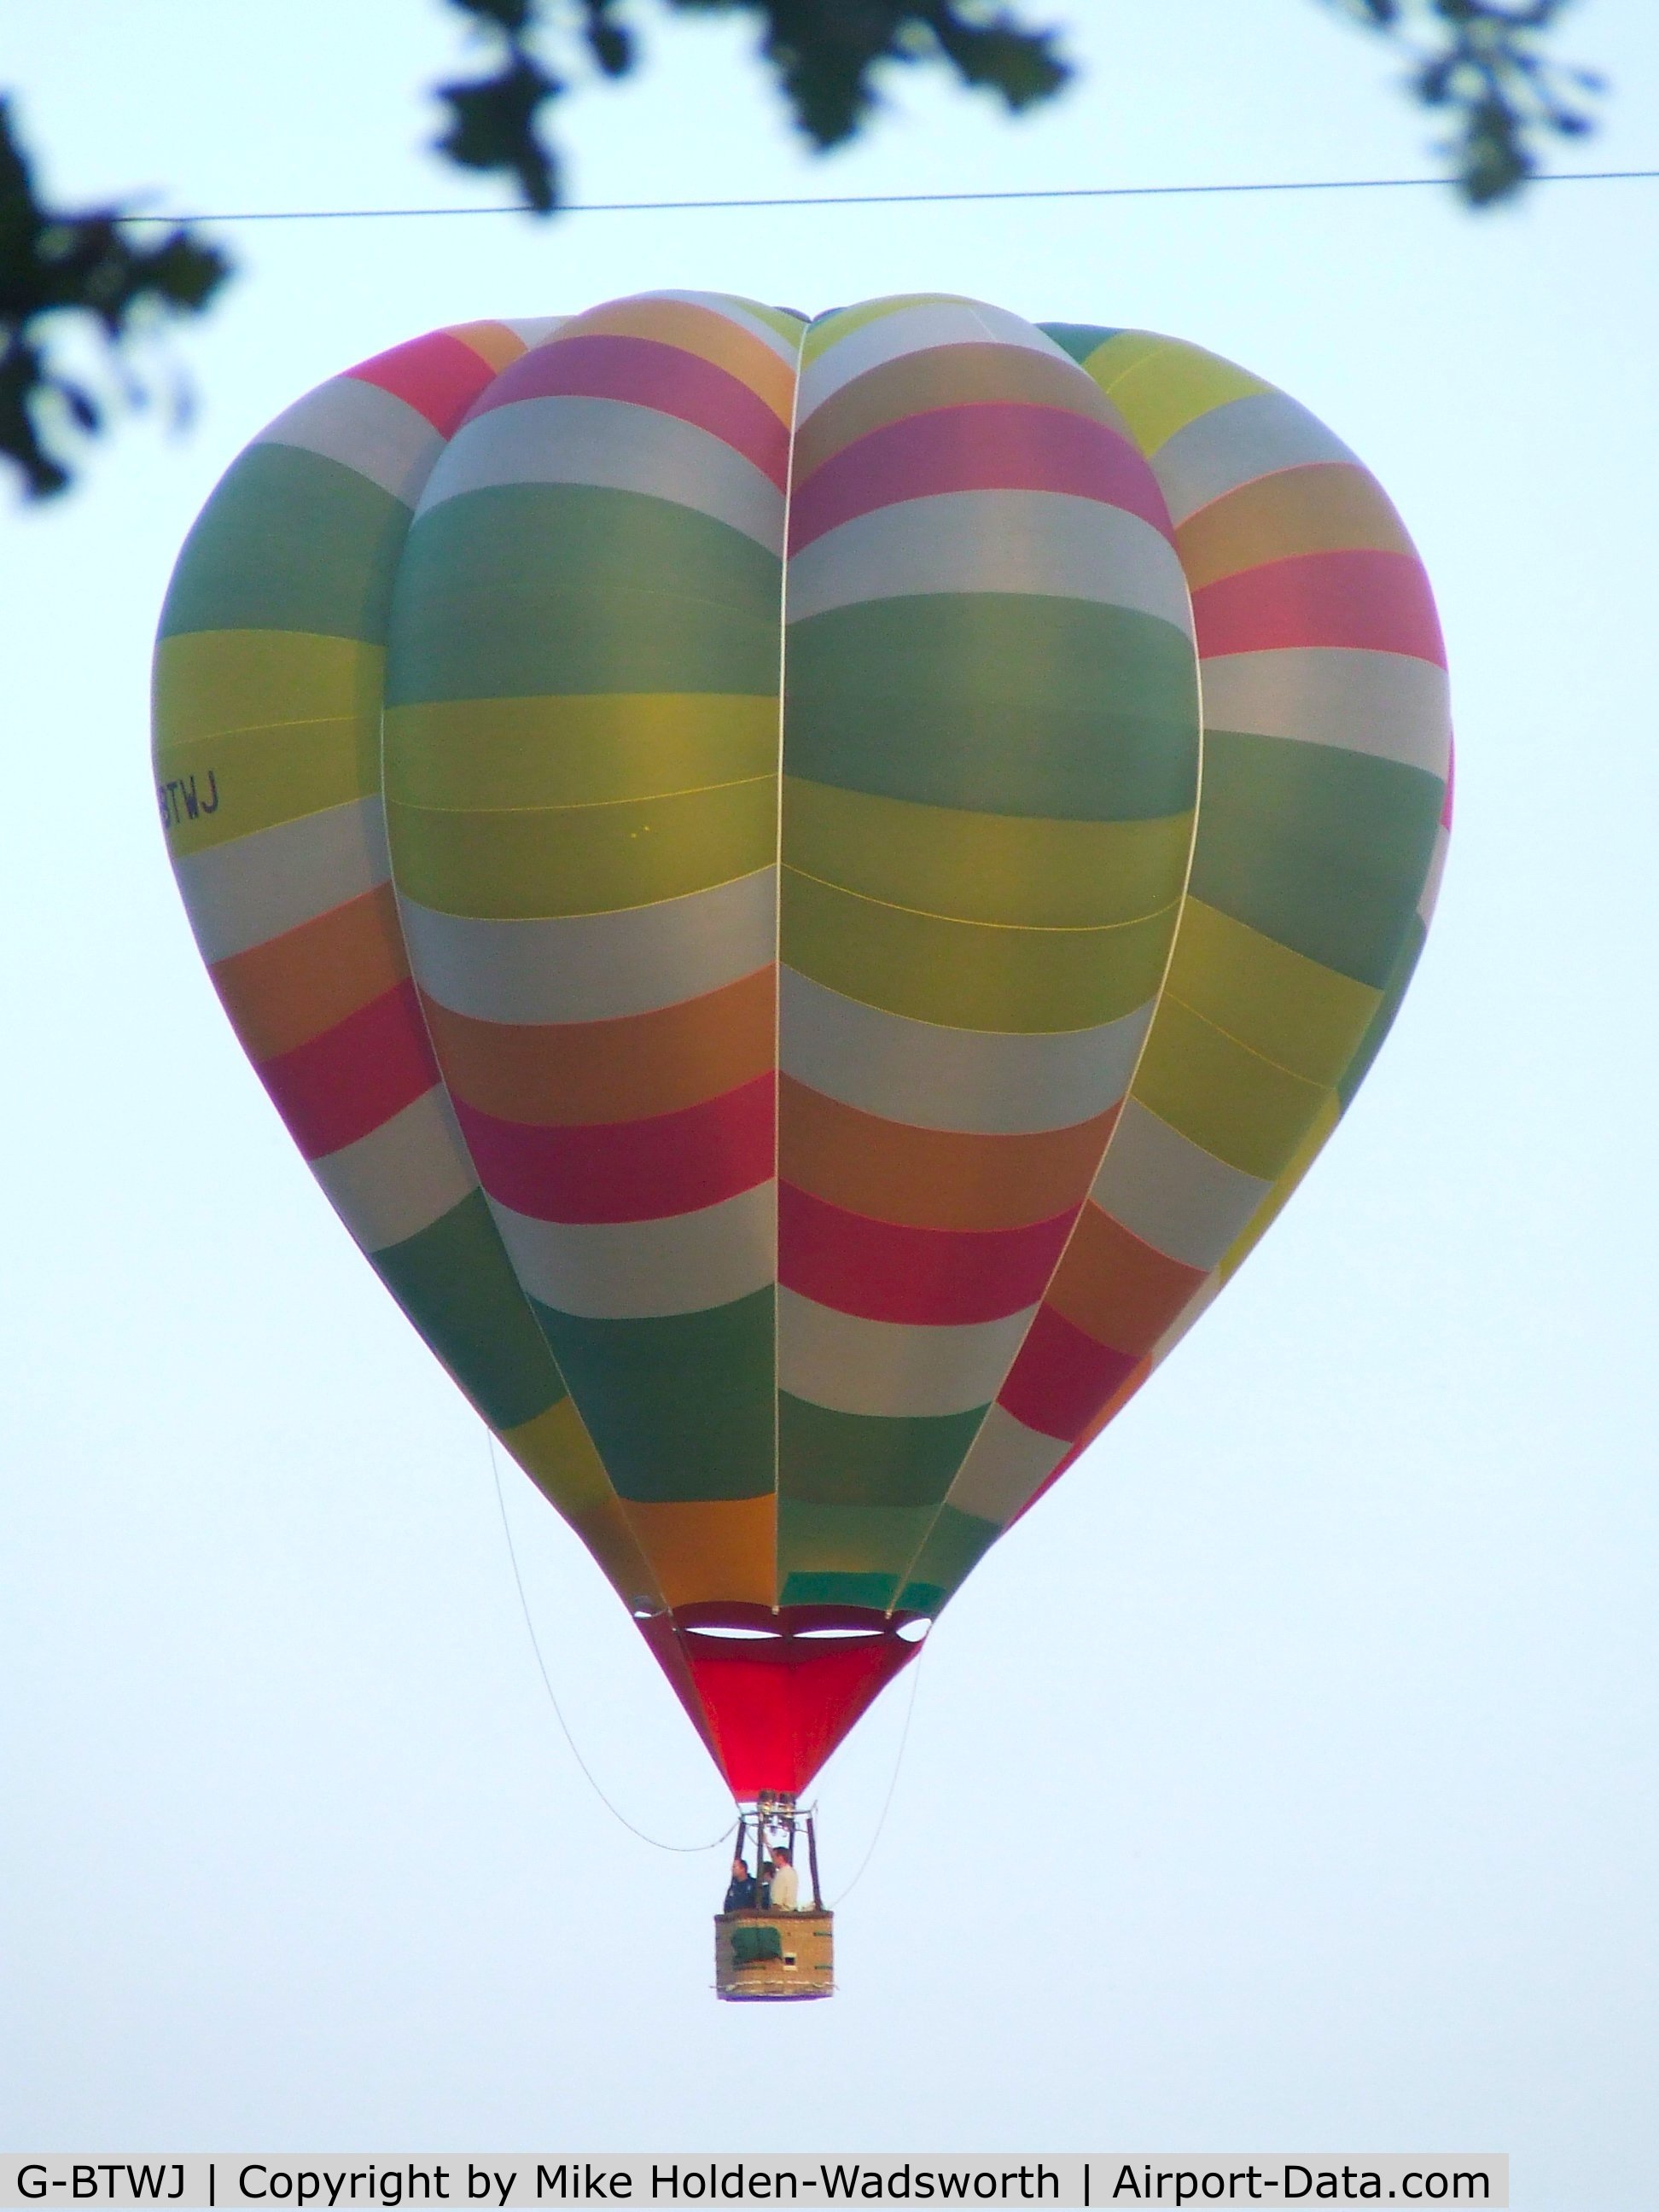 G-BTWJ, 1992 Cameron Balloons V-77 C/N 2670, Cameron V-77